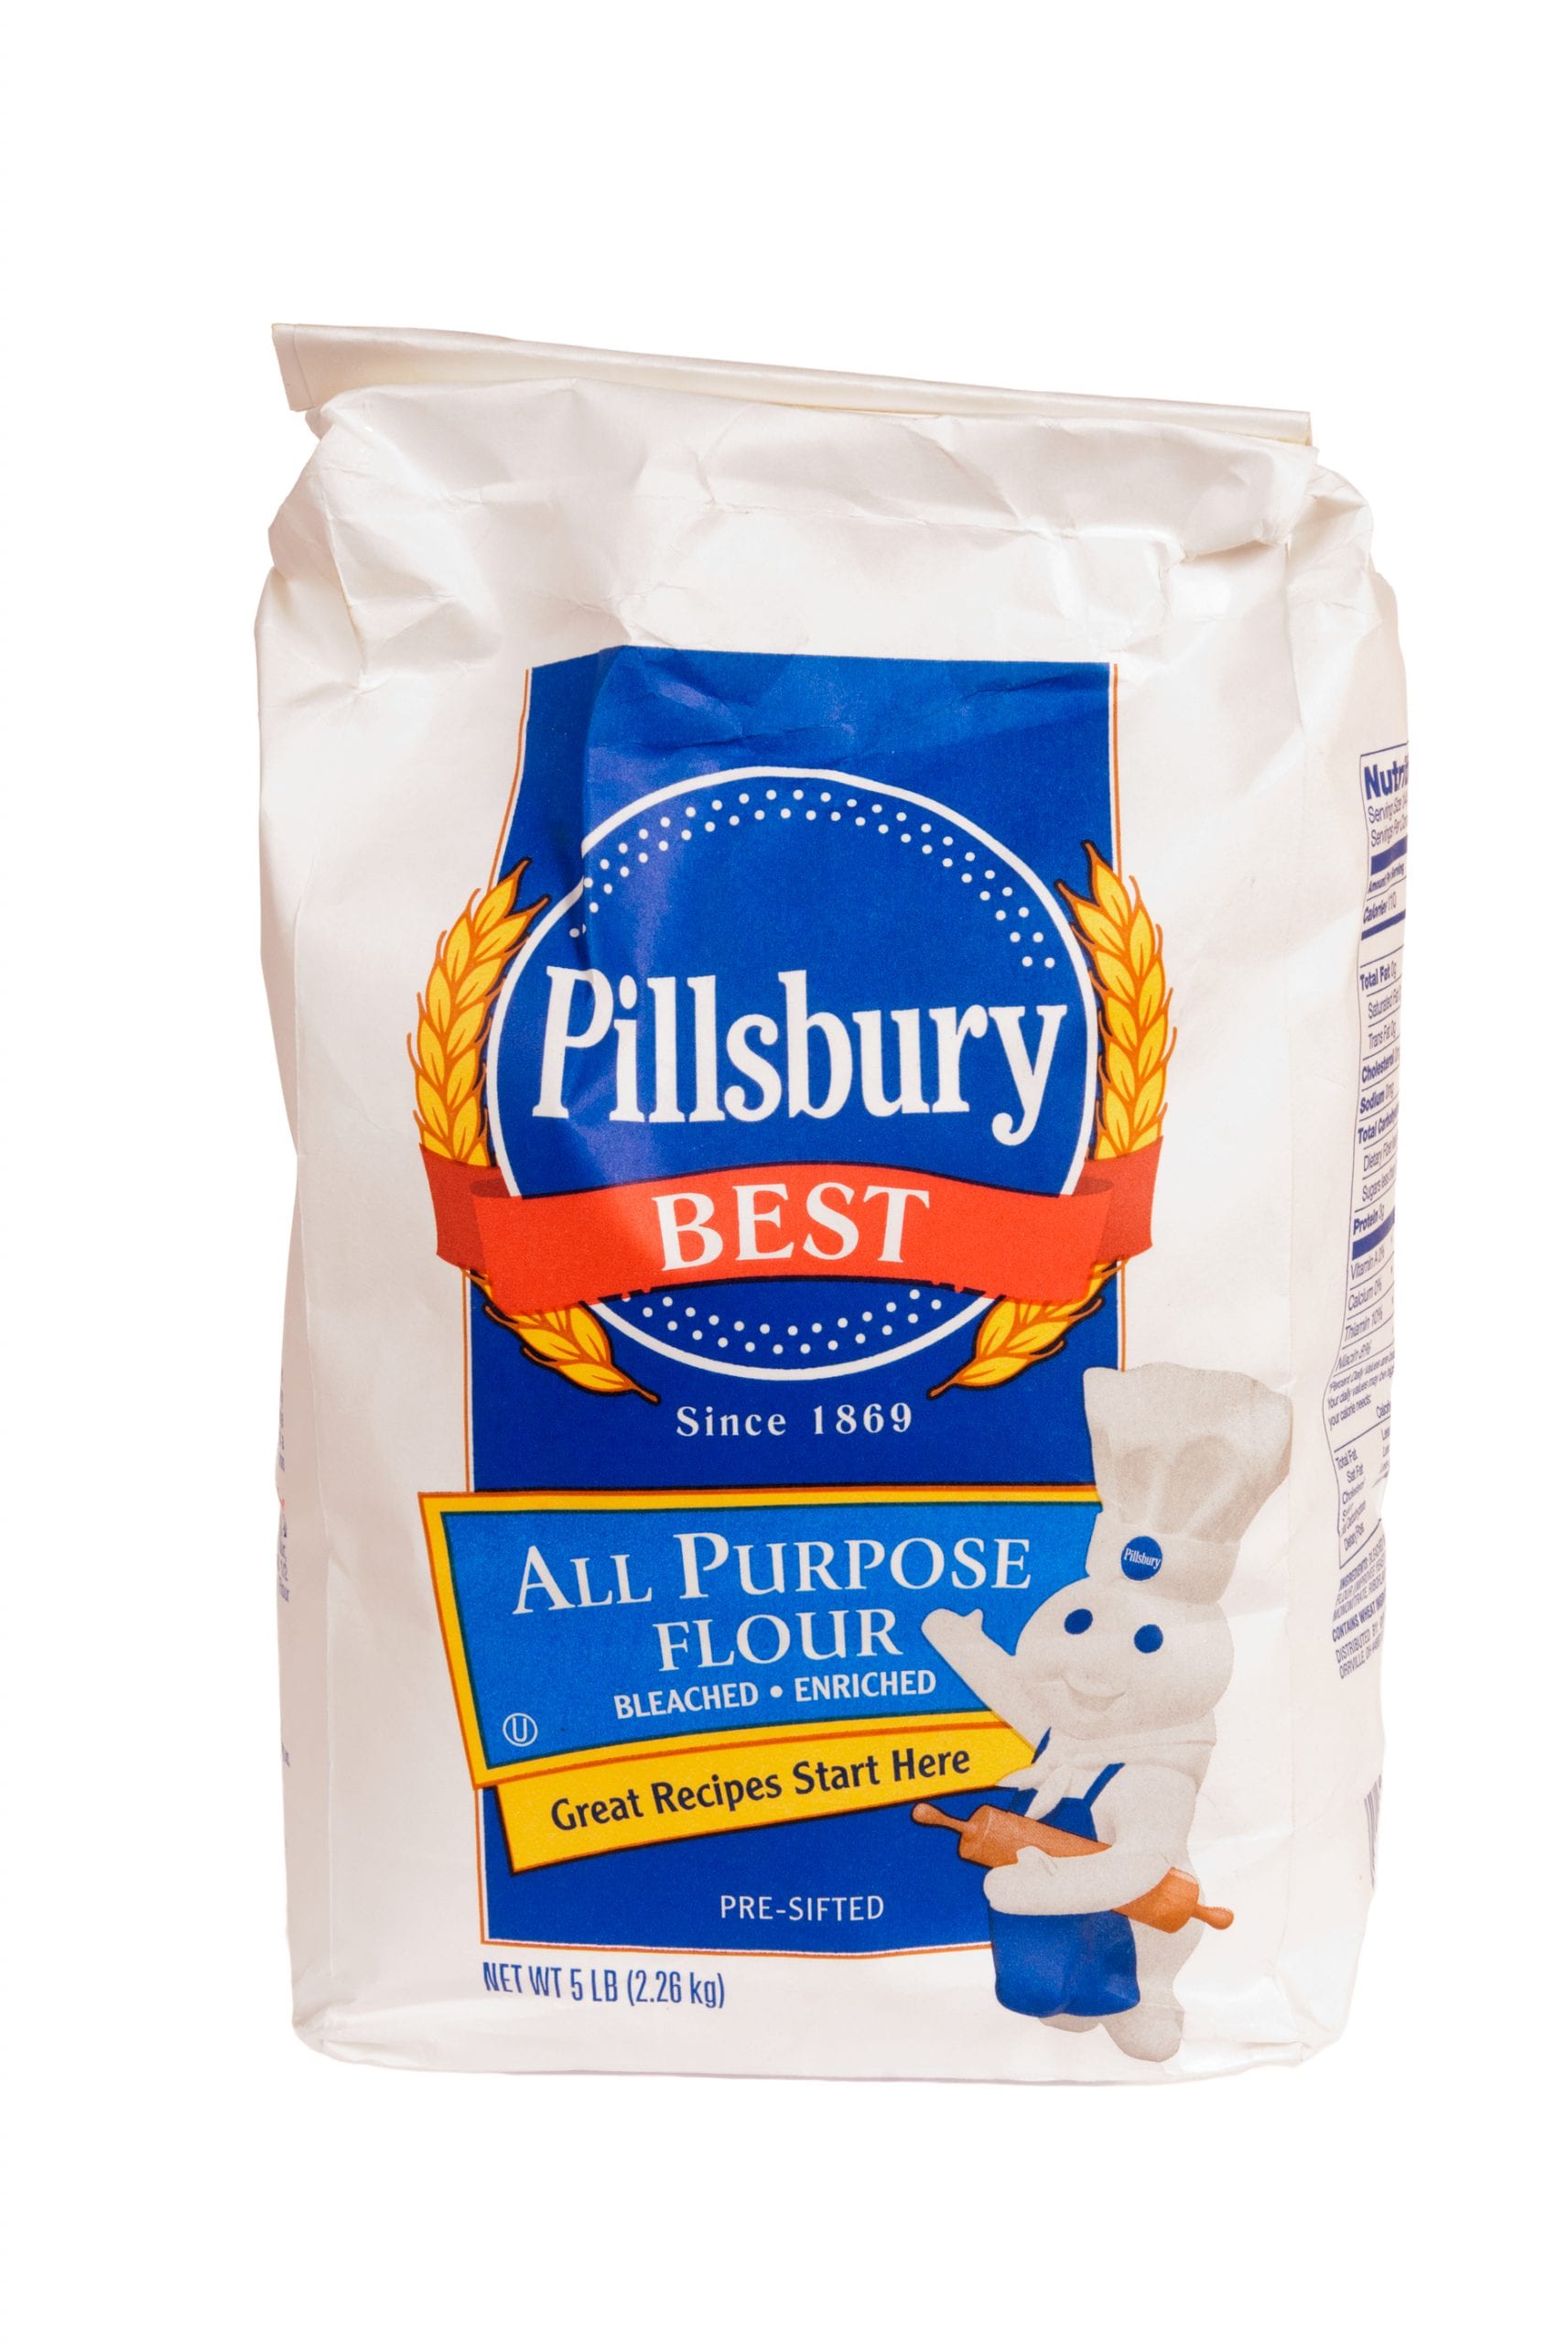 Pillsbury Recalls Flour Products for Possible Salmonella Contamination